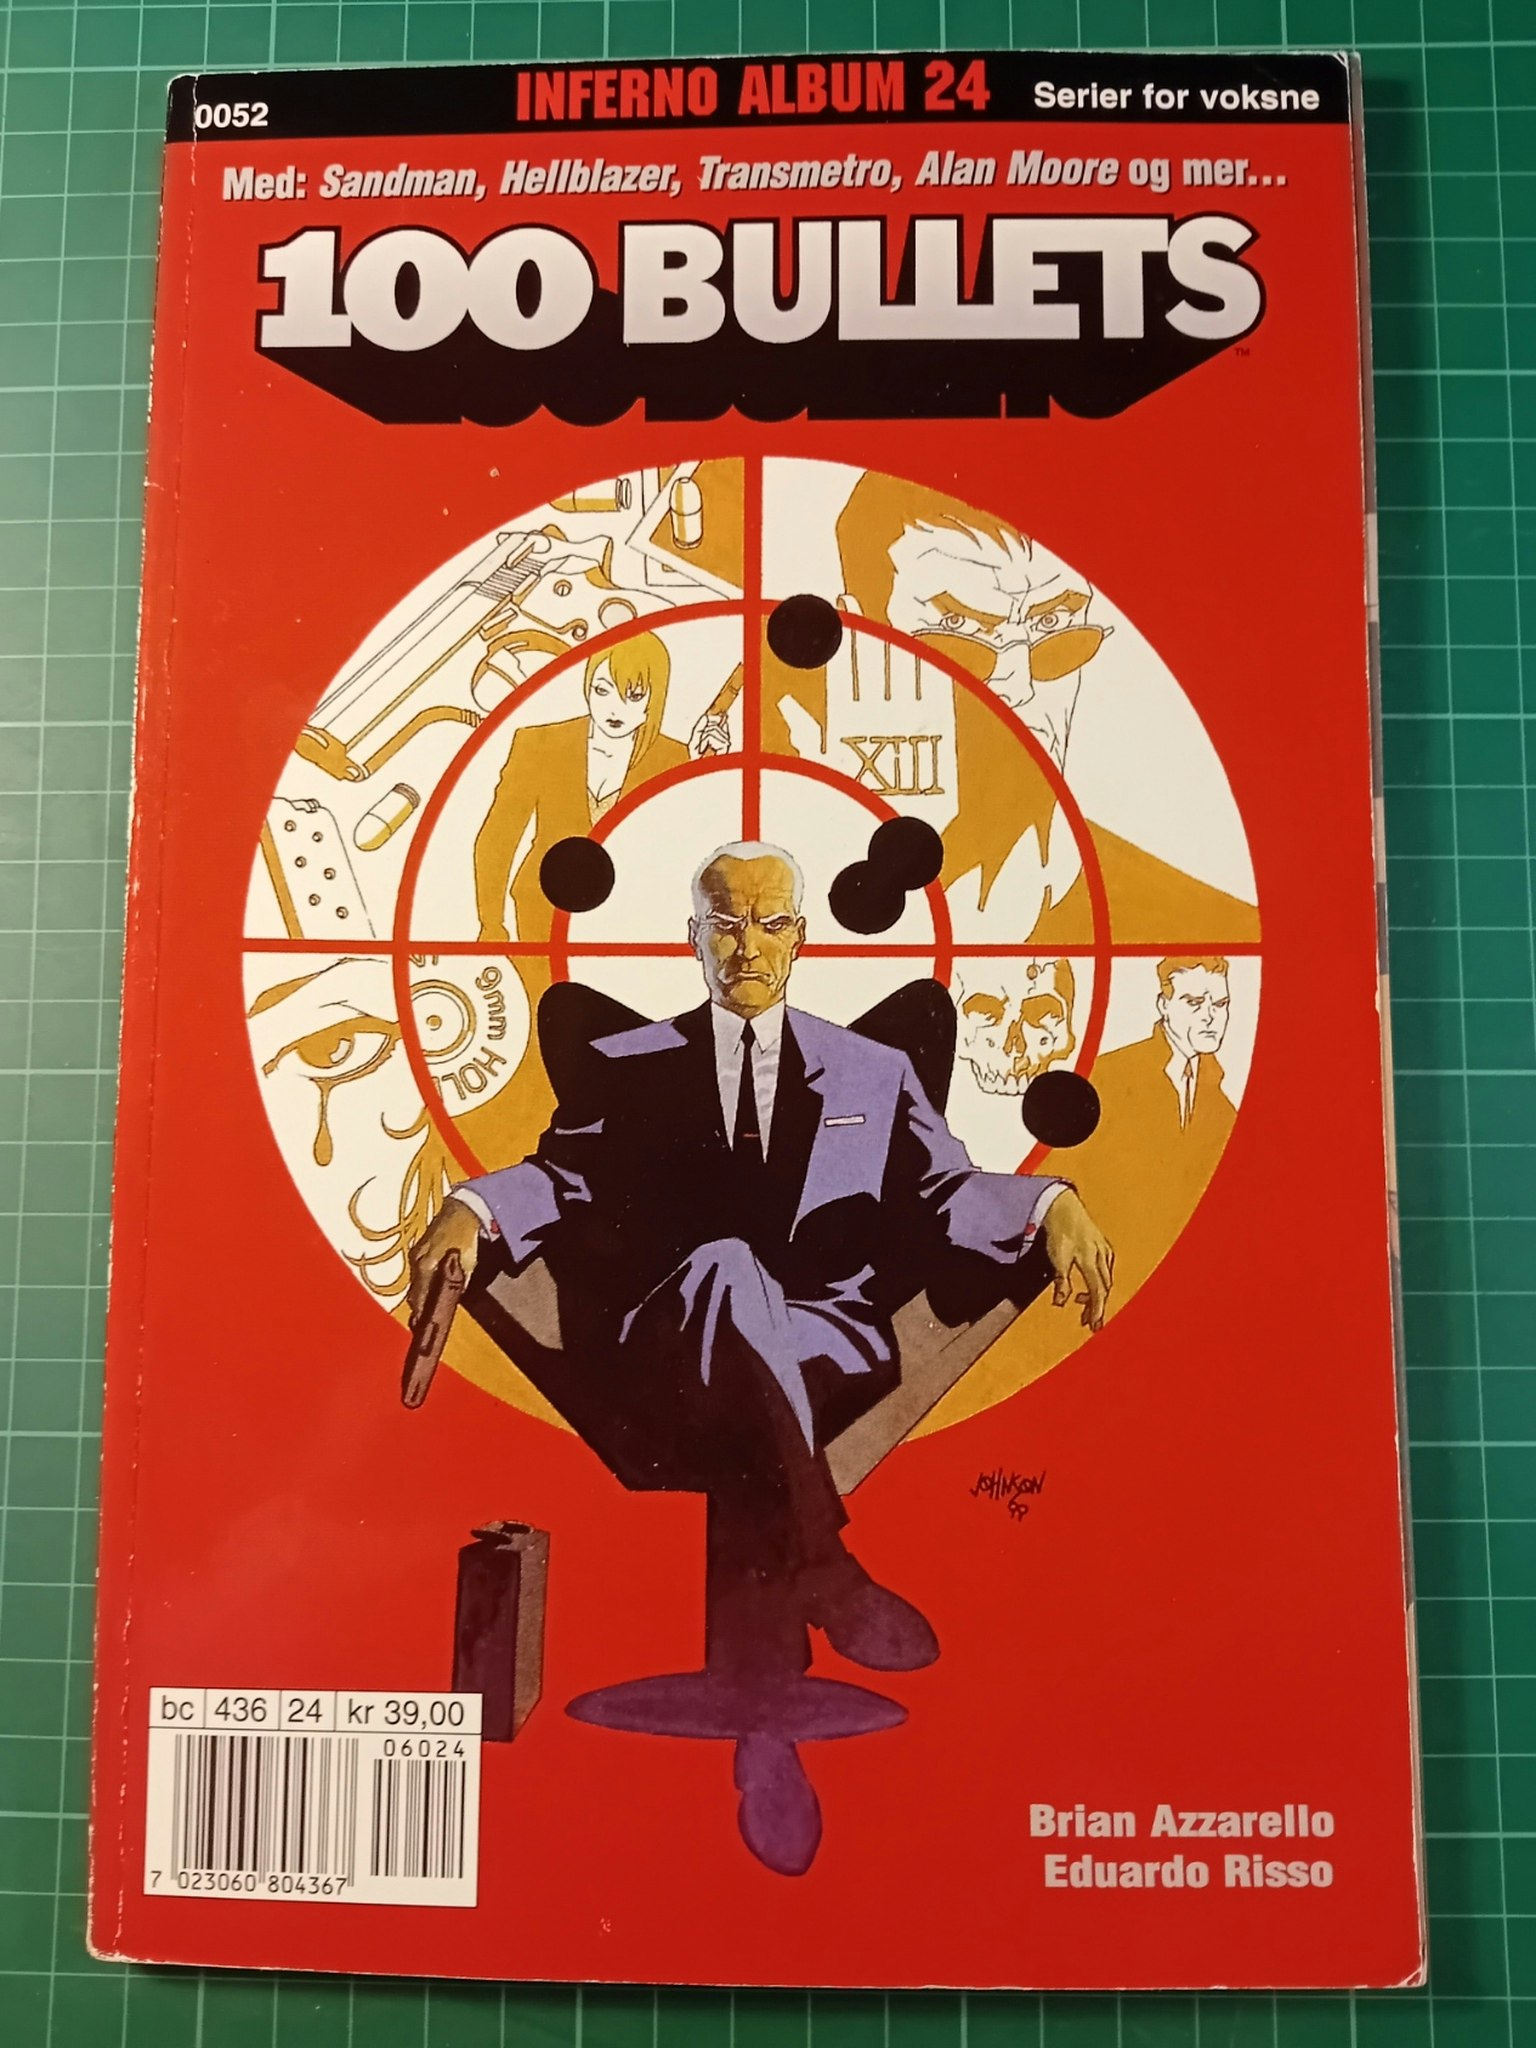 Inferno album 24 100 Bullets